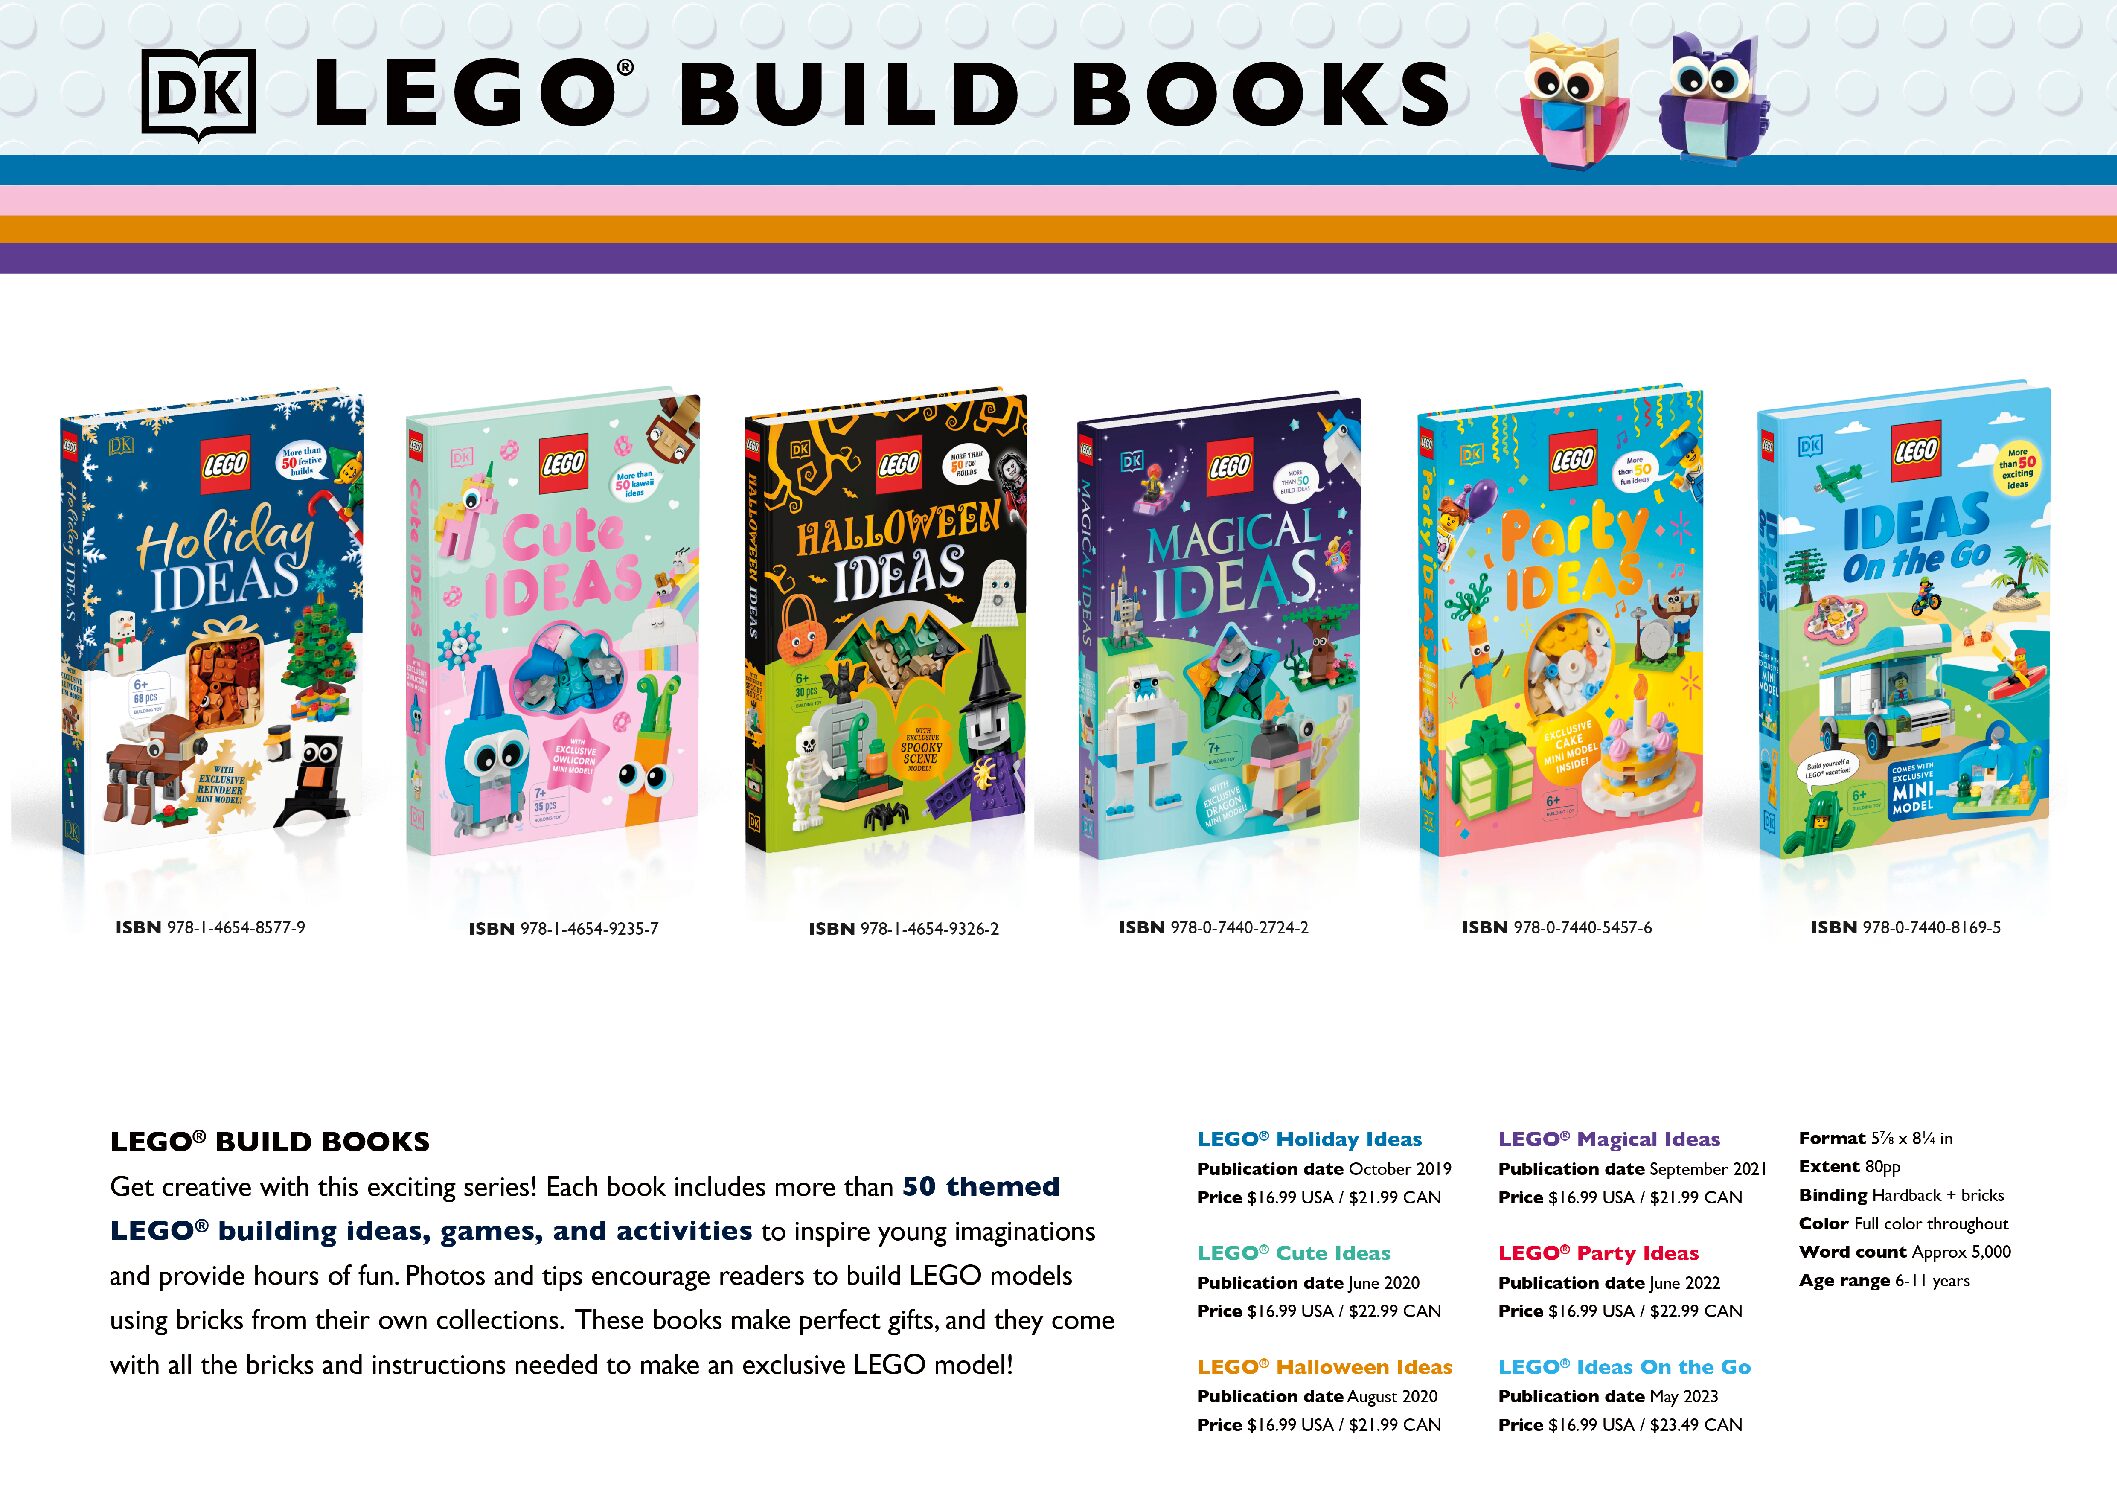 DK LEGO Build Books cover